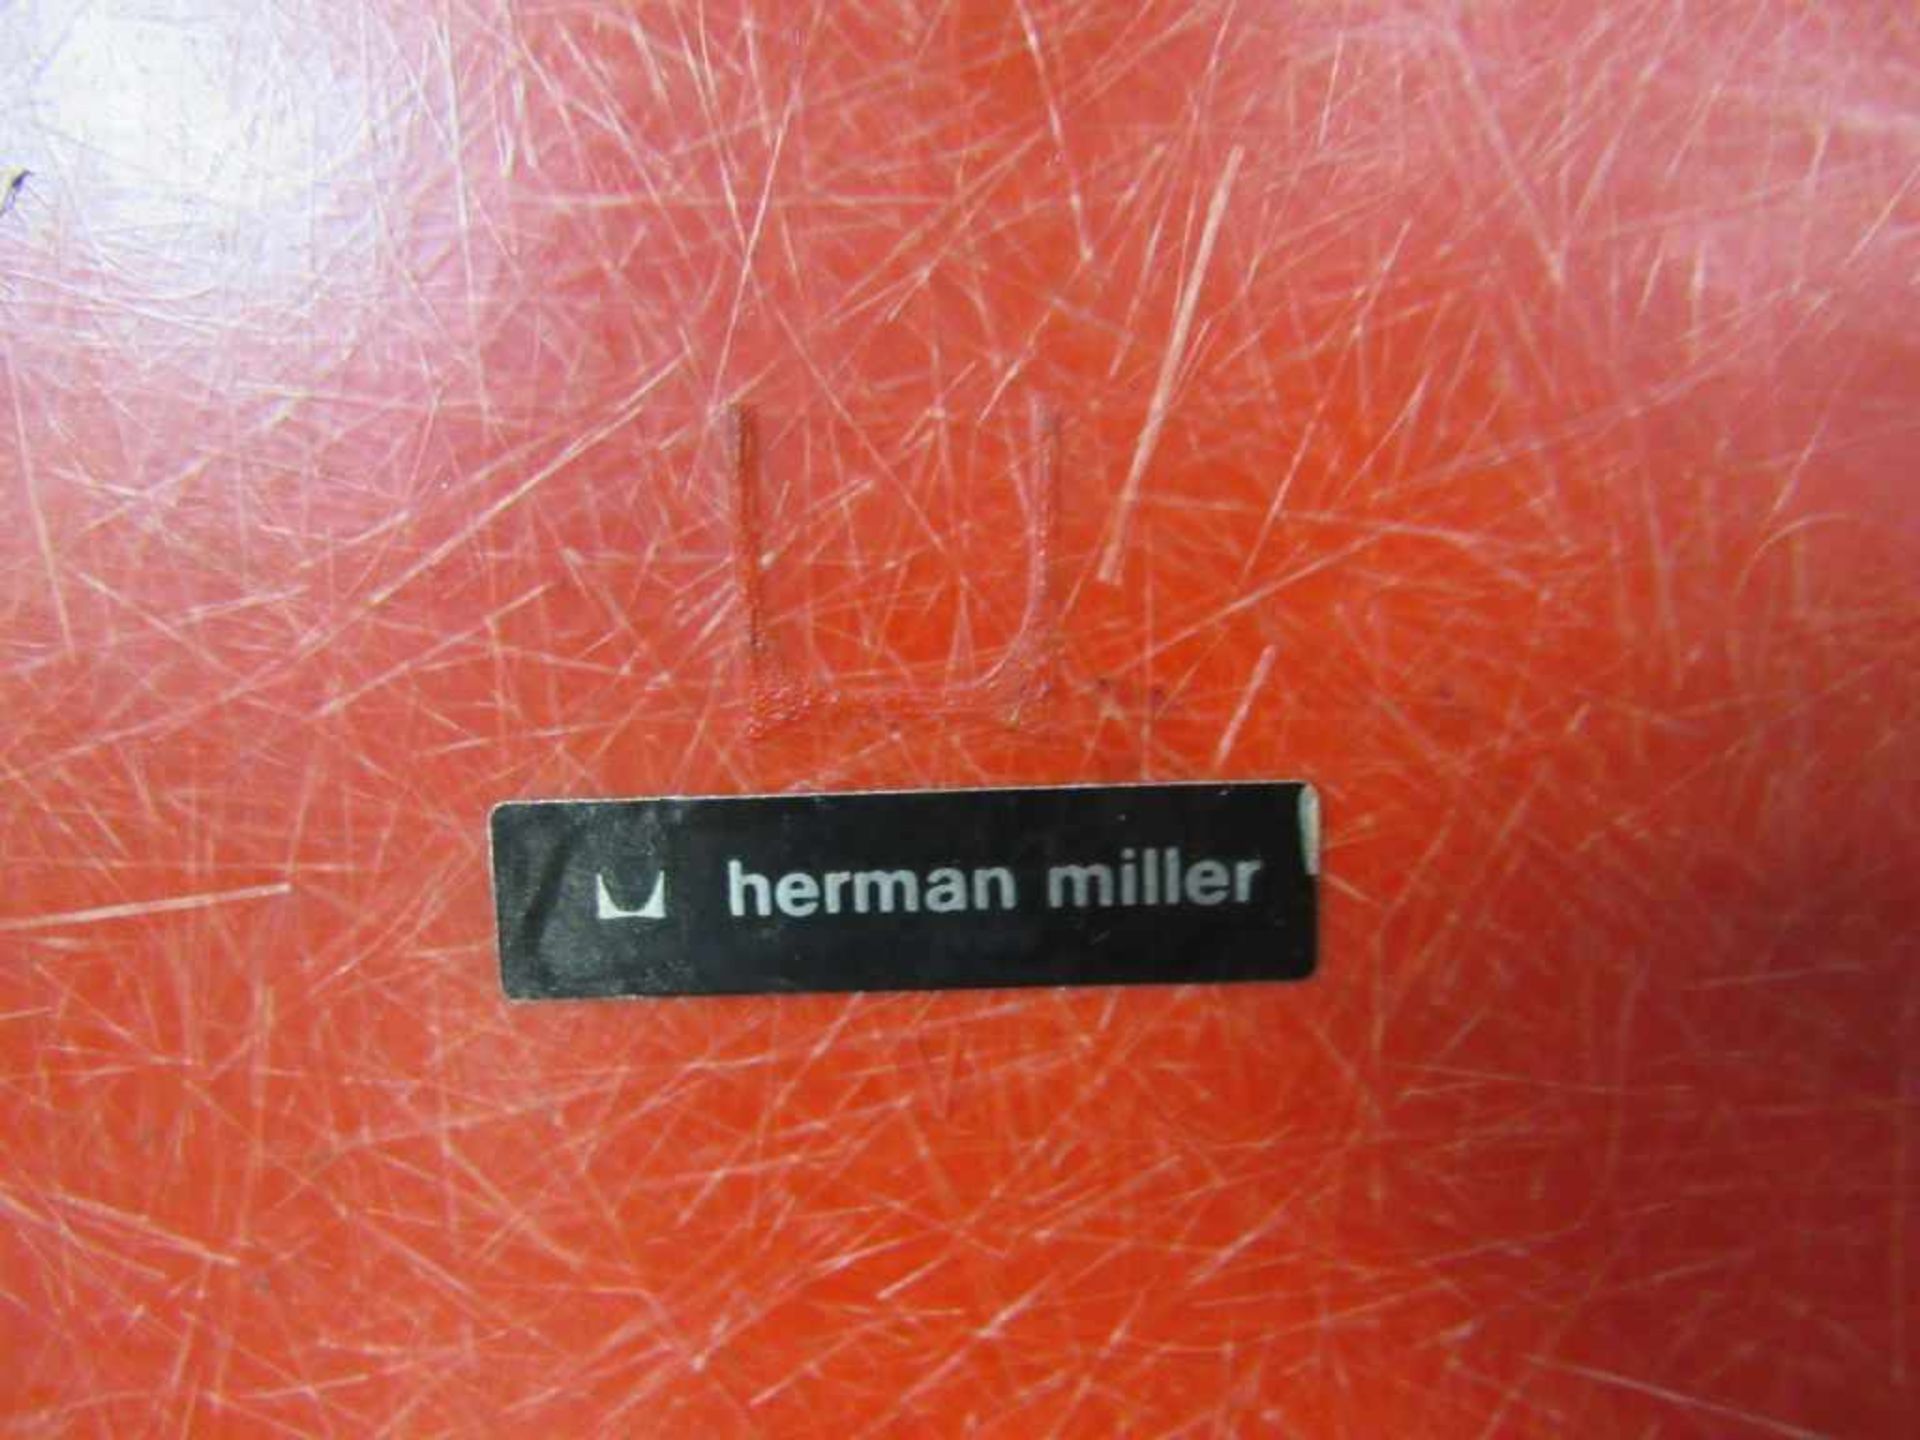 Stuhl Hermann Miller Space Age rote Fiberglasschale bezogen 60er Jahre Eams gelabelt auf La Fonda - Image 5 of 6